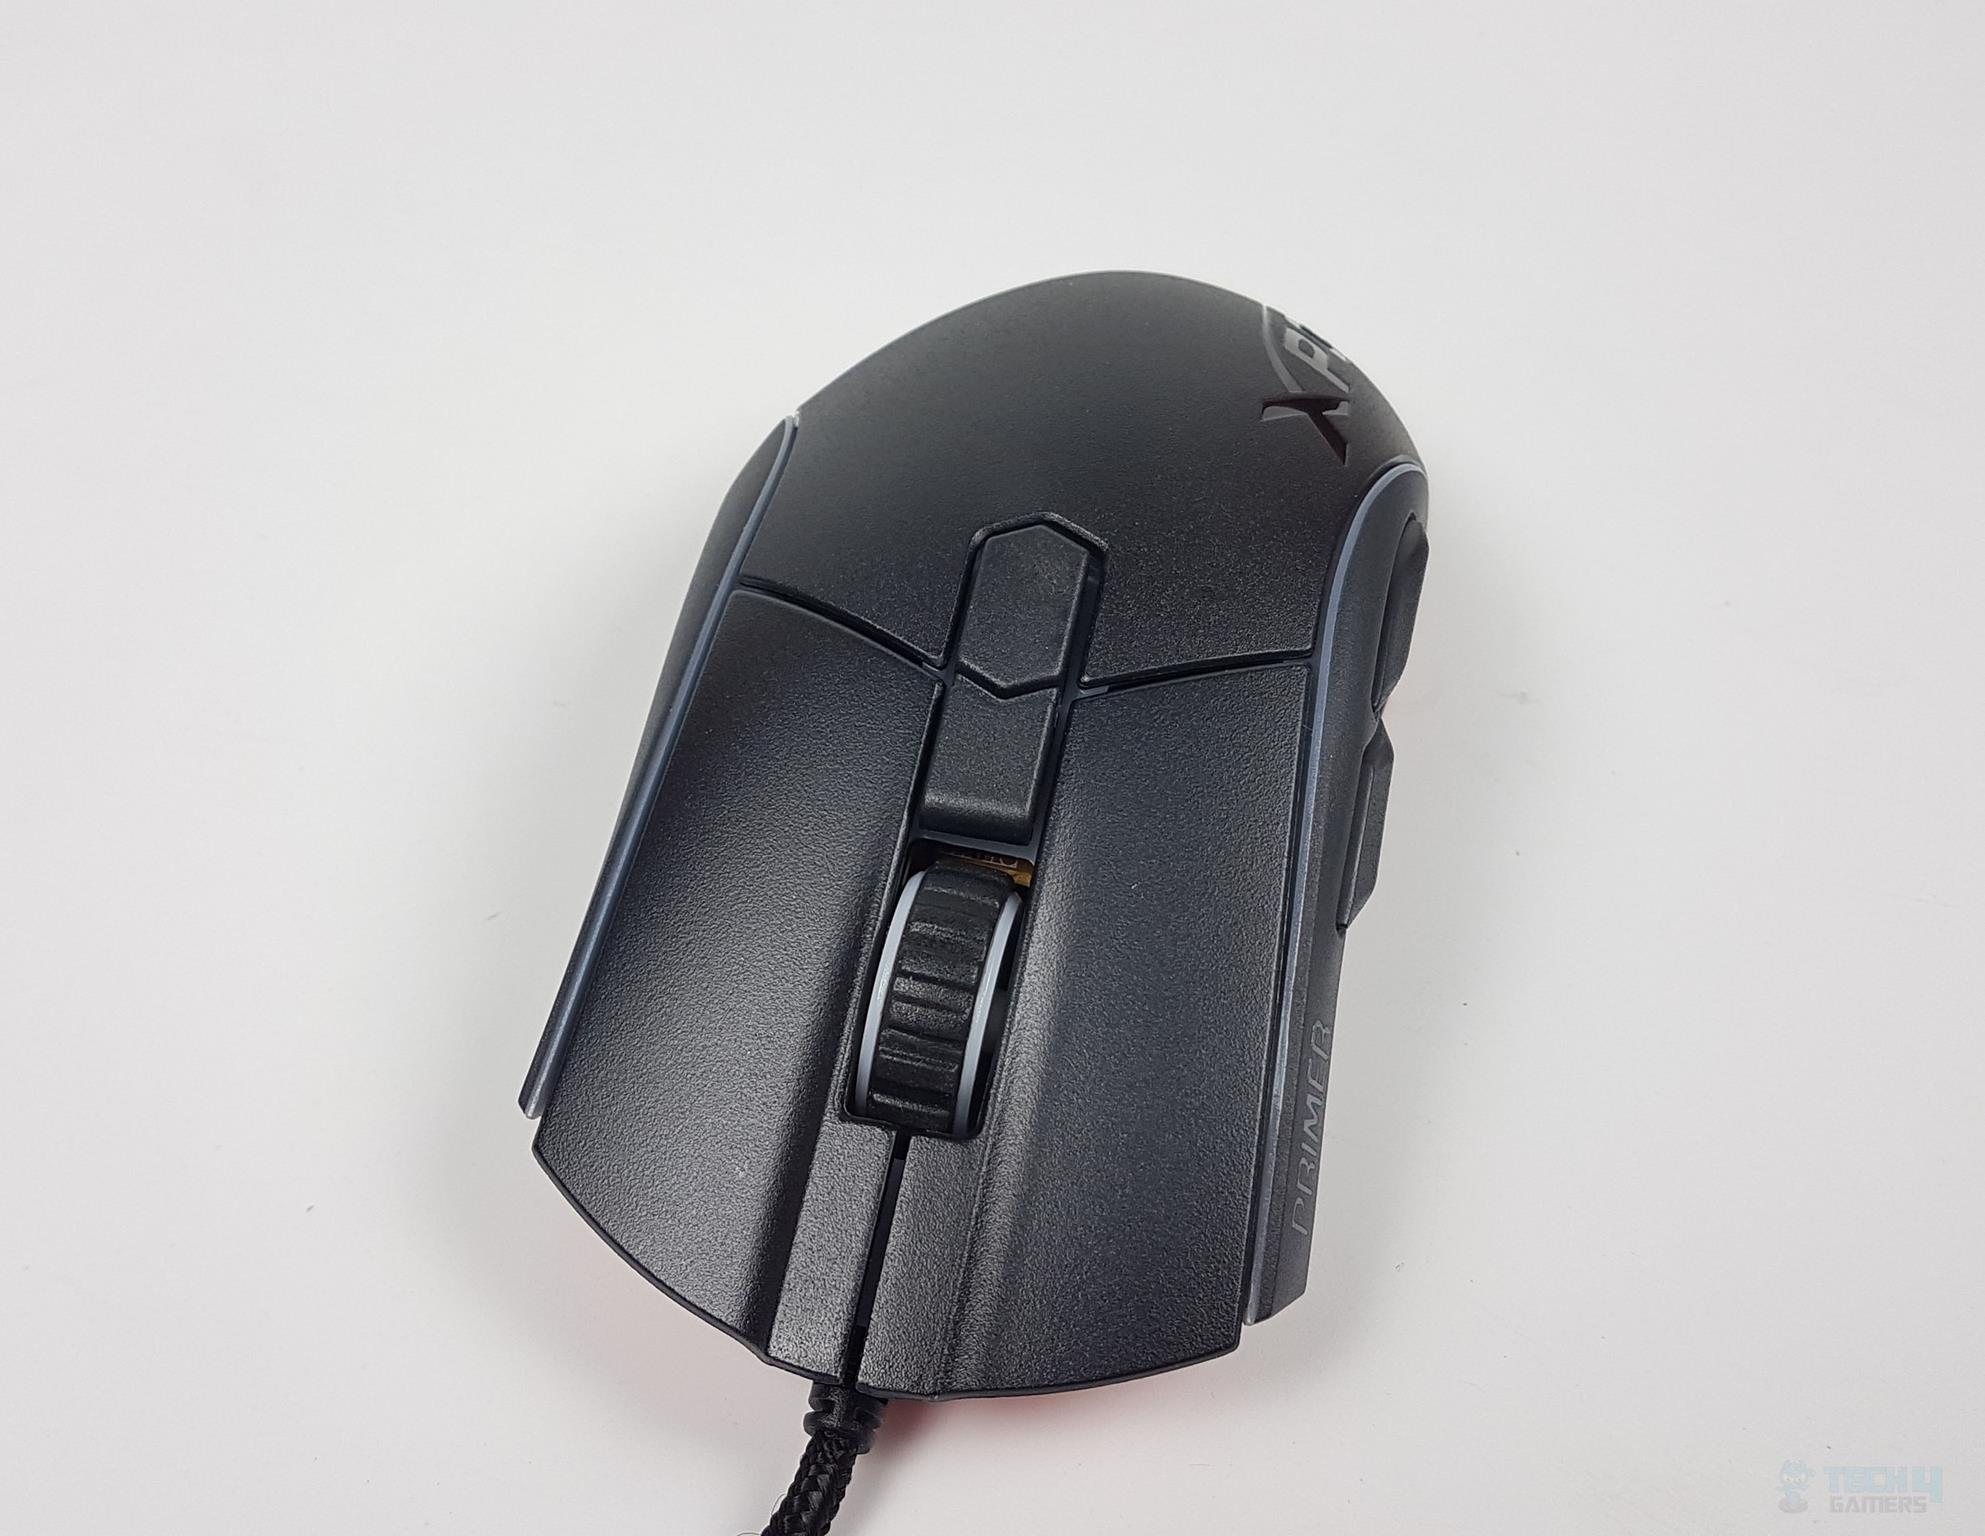 XPG Gaming Mouse